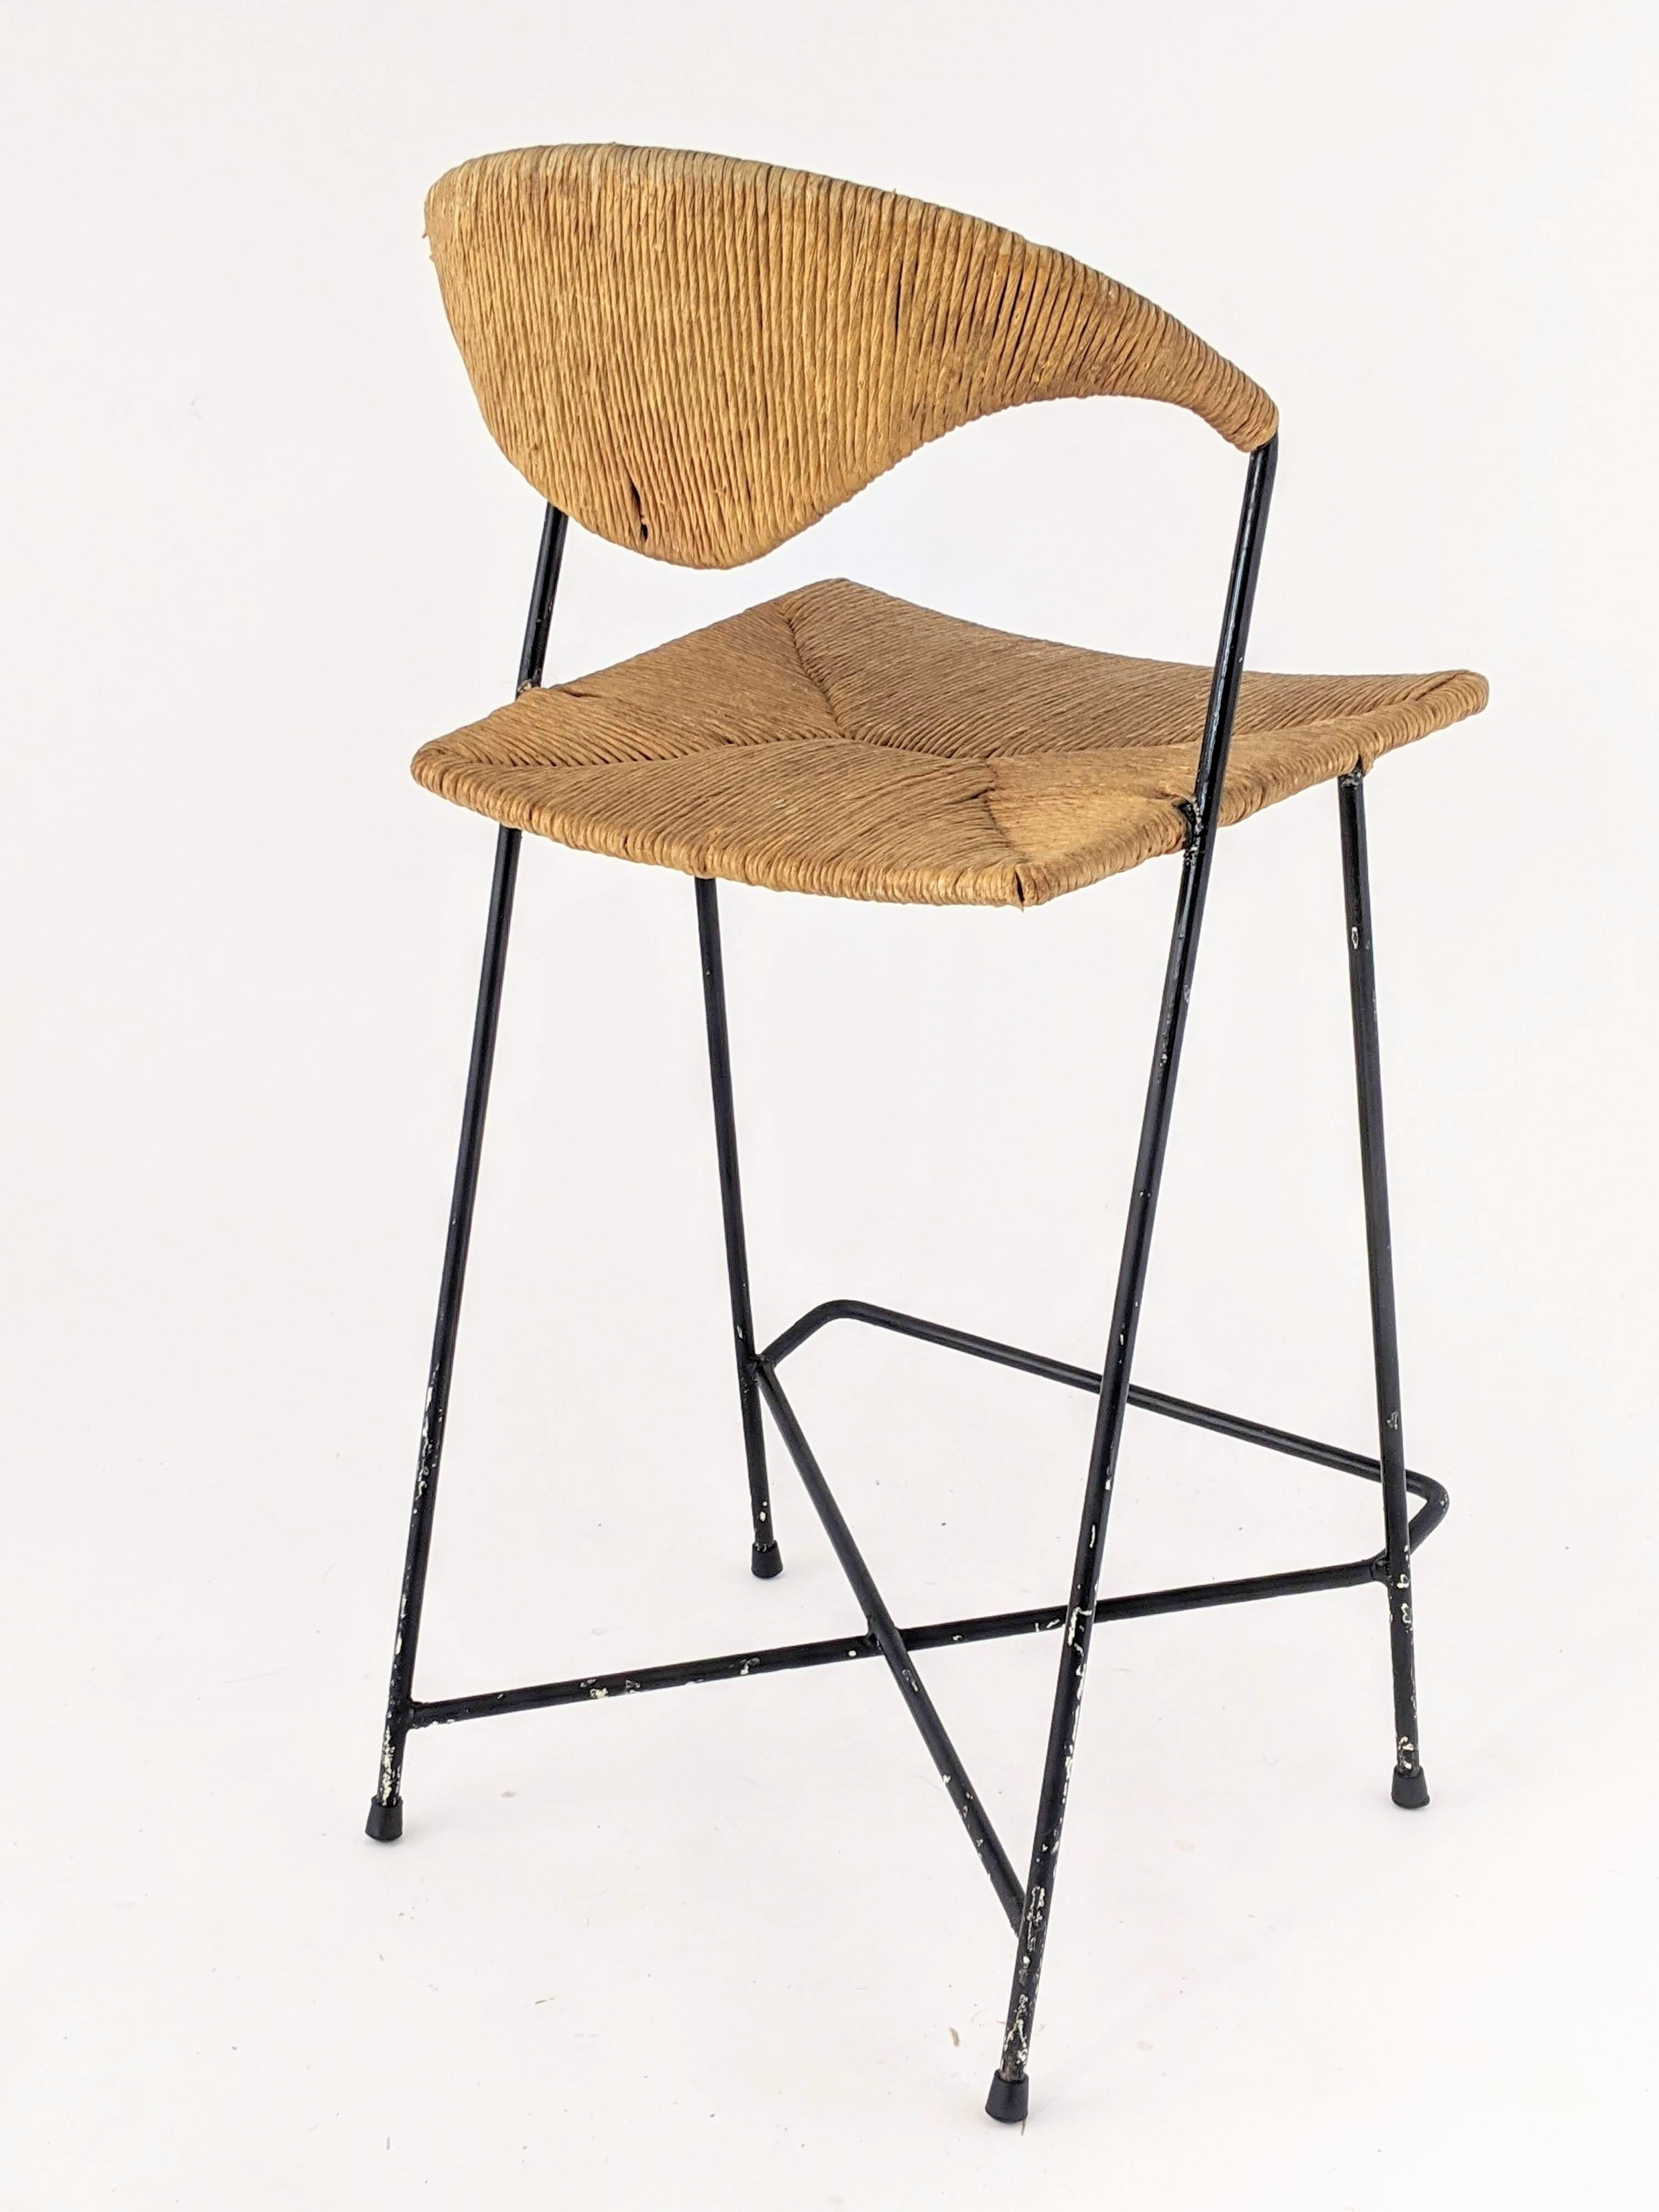 1950s Arthur Umanoff Wicker & Steel Rod High Chair, USA For Sale 1